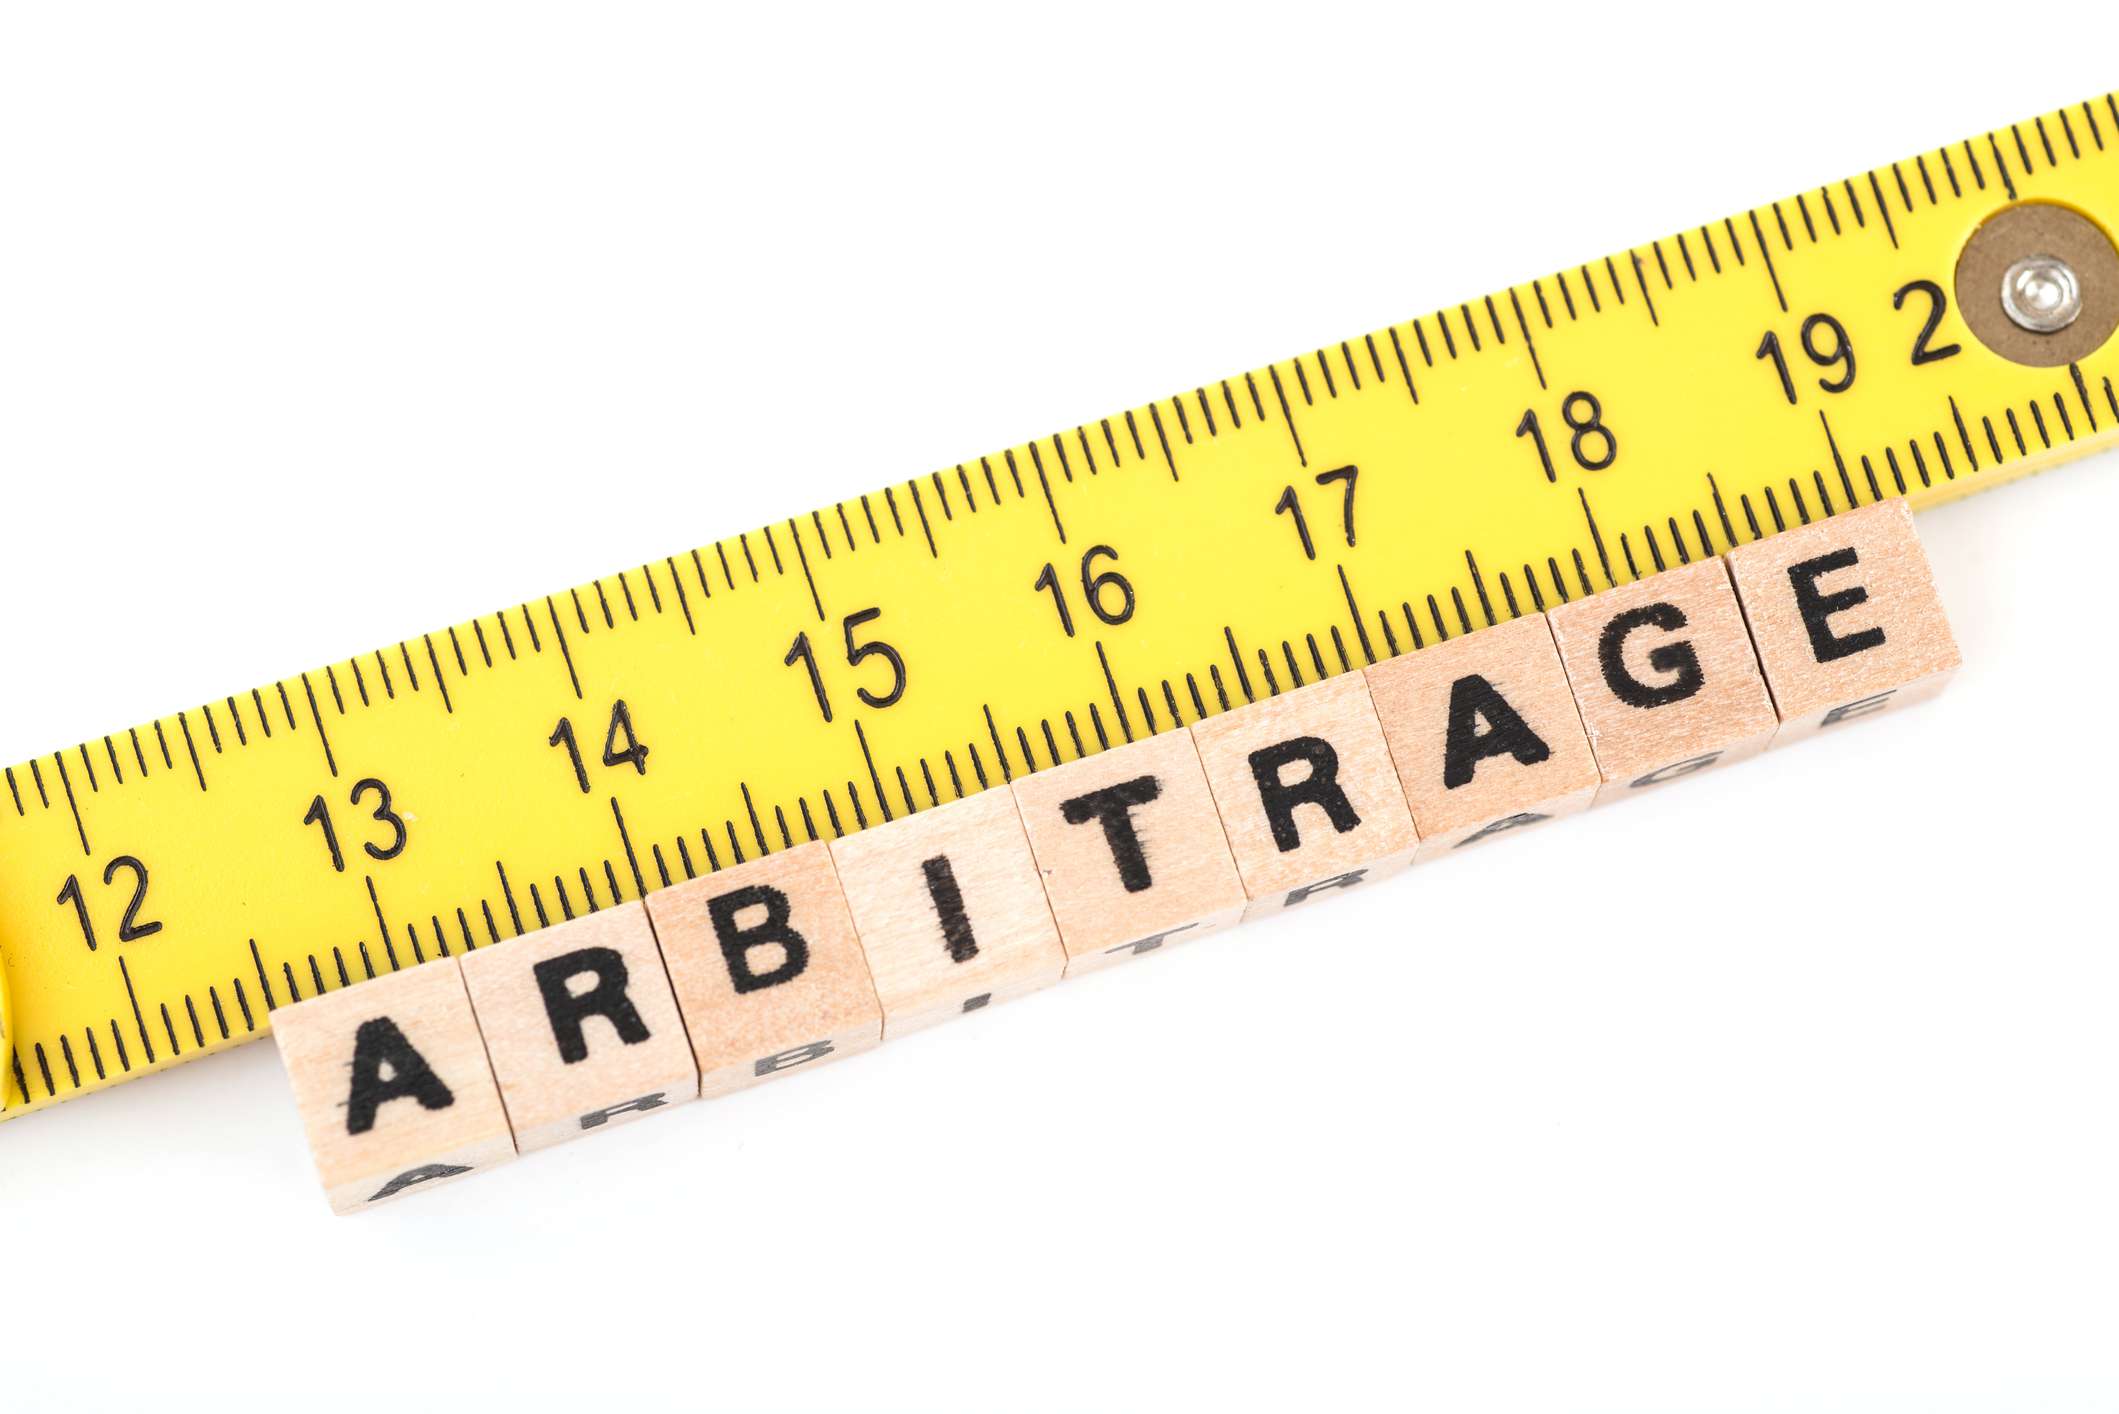 A ruler measuring wood blocks that read arbitrage